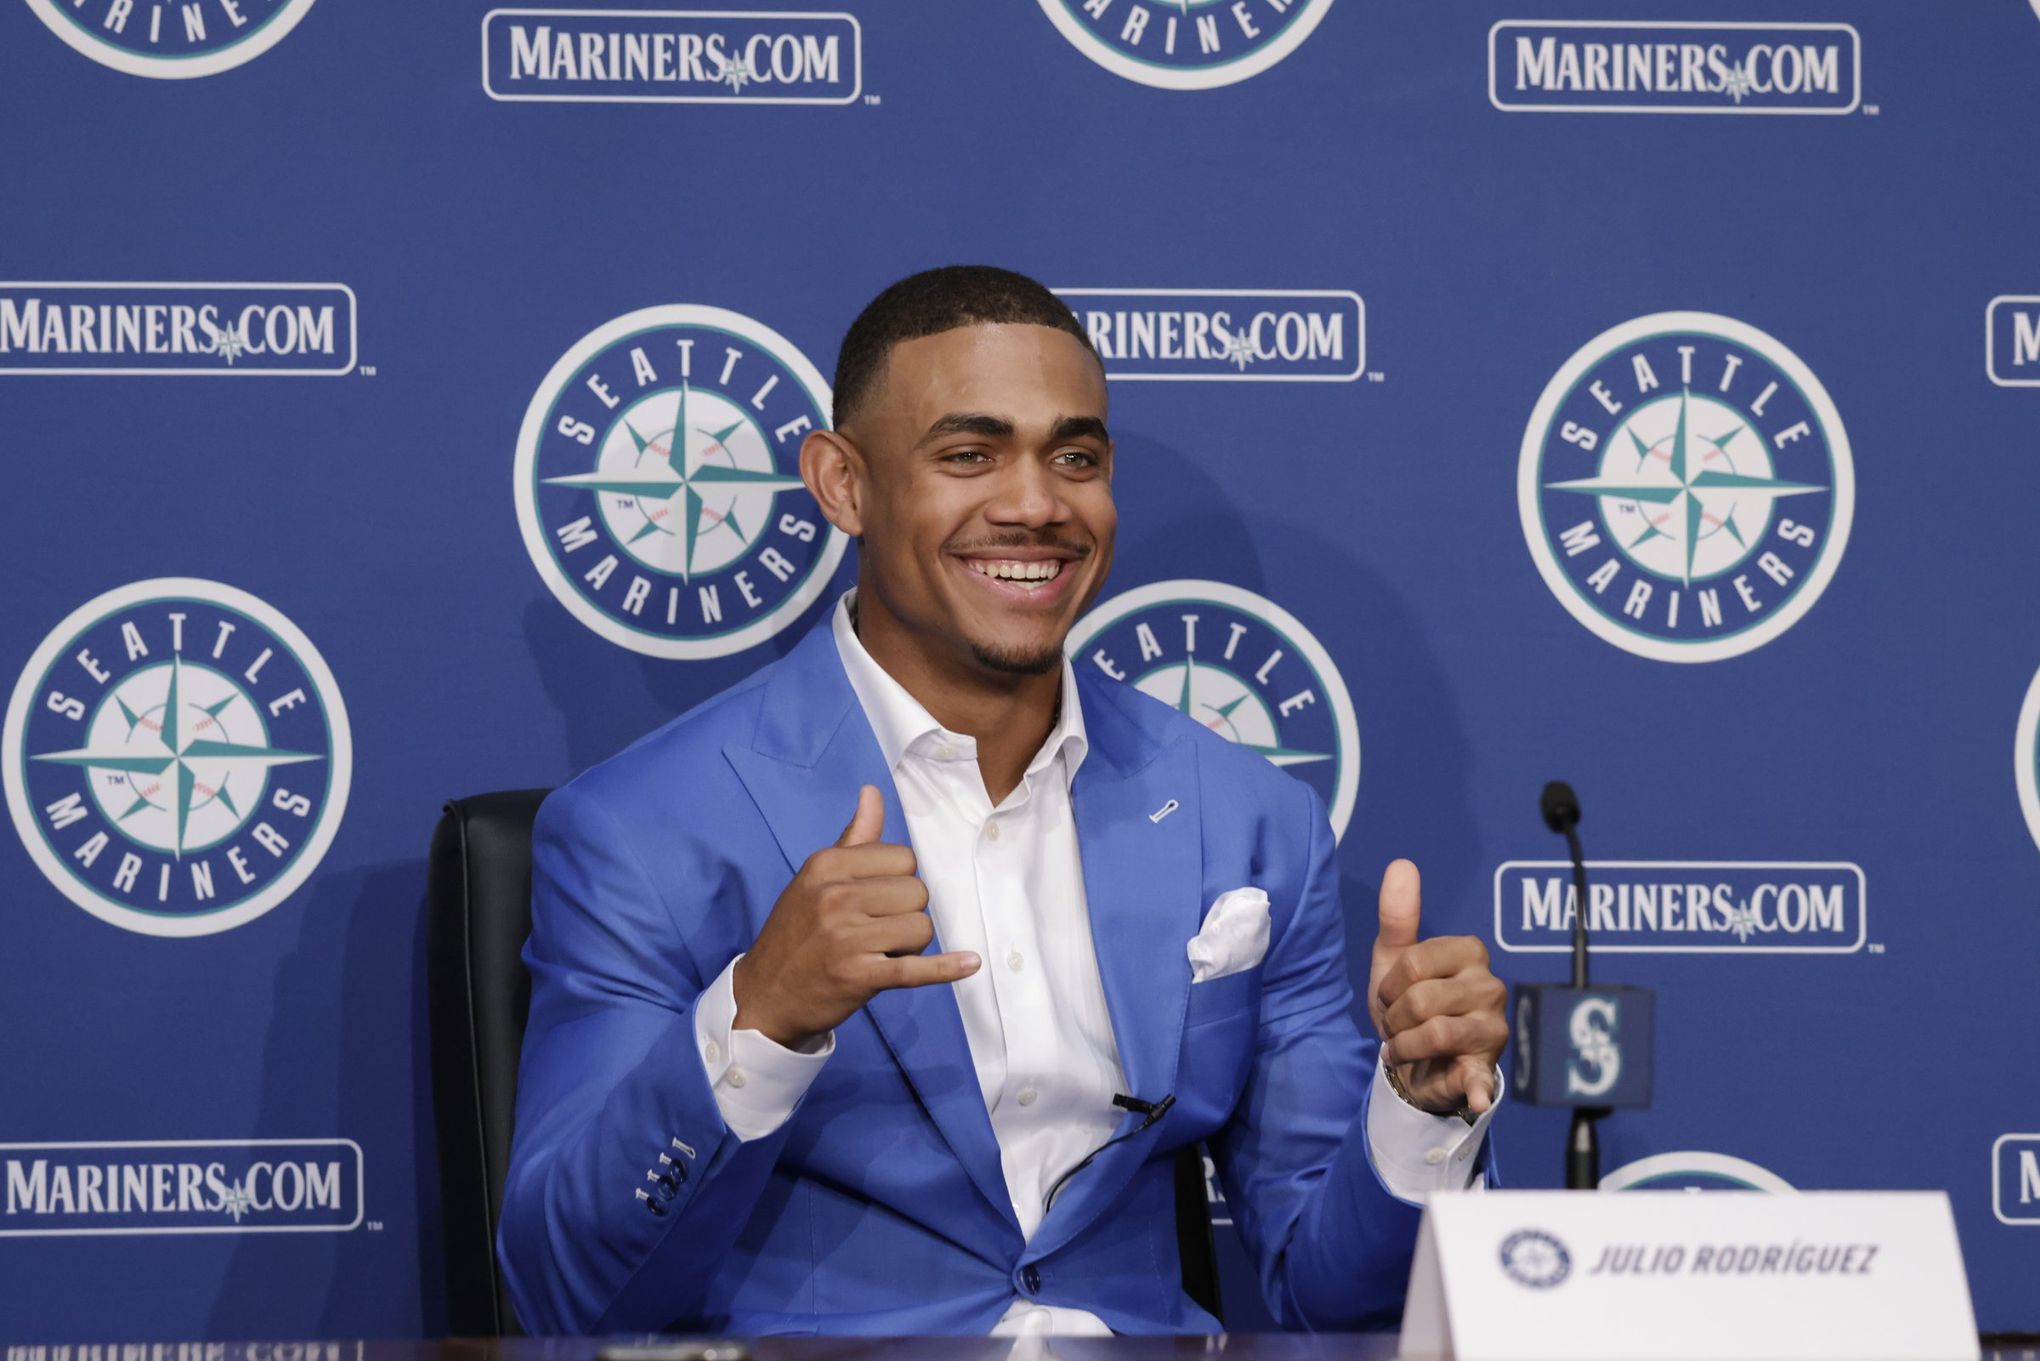 Mariners put money into Julio Rodriguez as baseball player, years